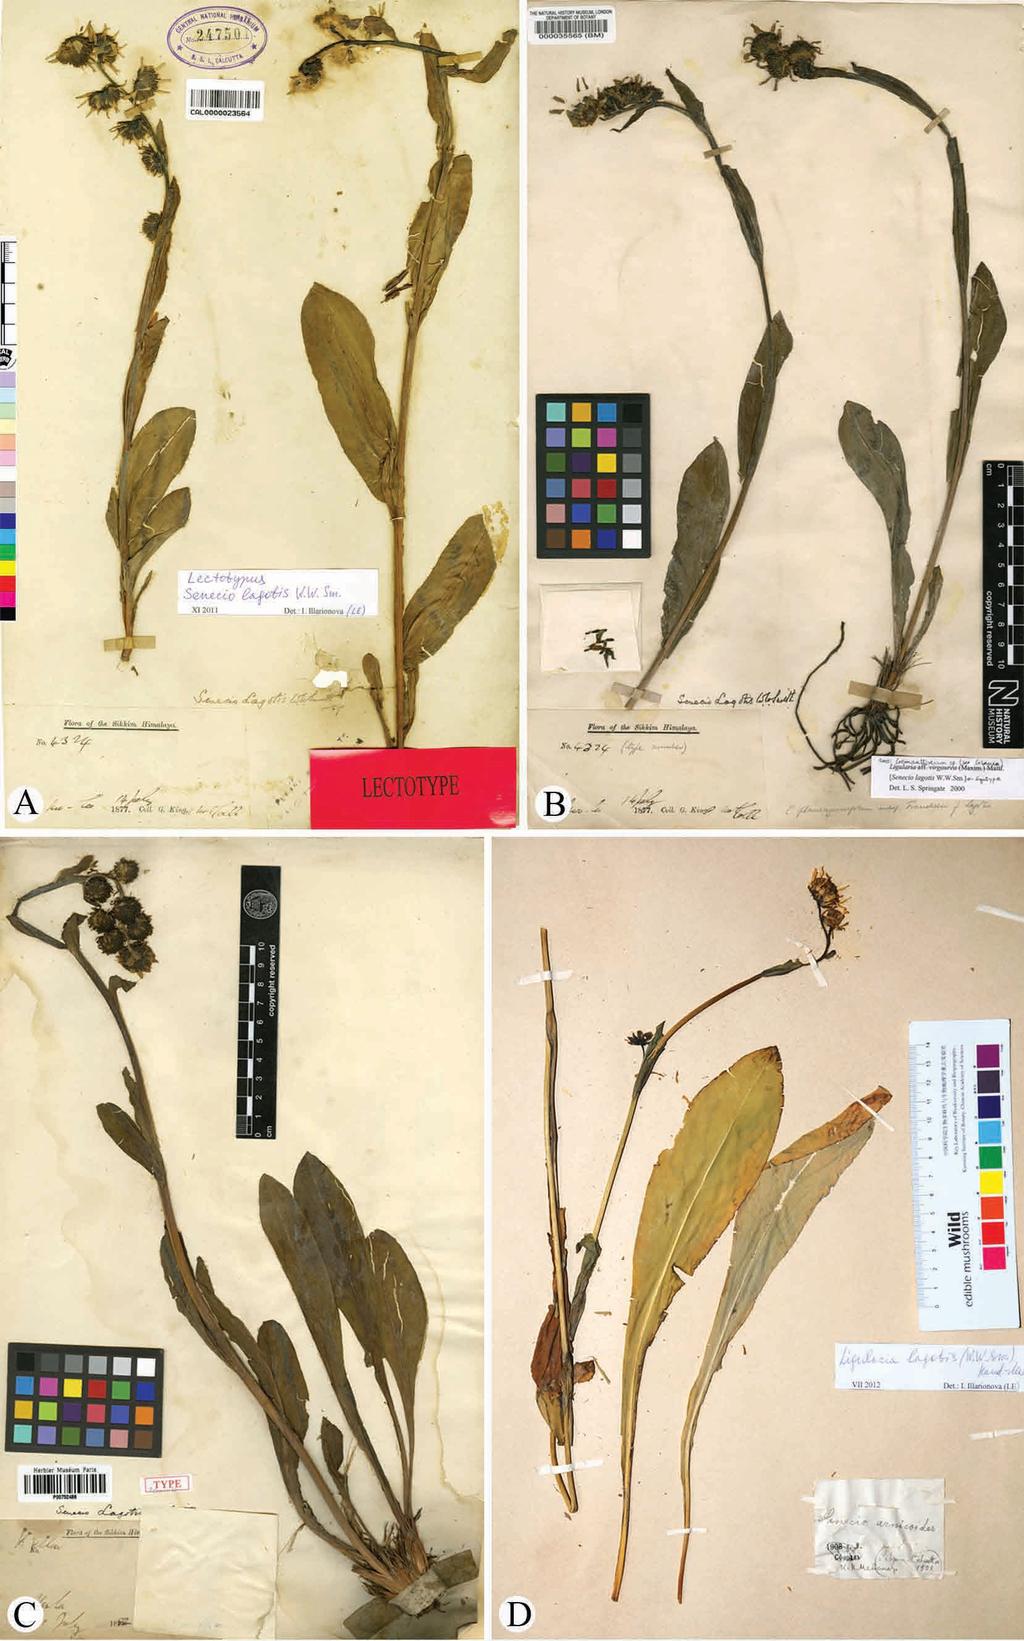 FIGURE 3. Specimens of Ligularia lagotis. A. India, Sikkim, Too-ku-la, G. King 4324 (CAL, lectotype). B. G. King 4324 (BM, isolectotype). C.